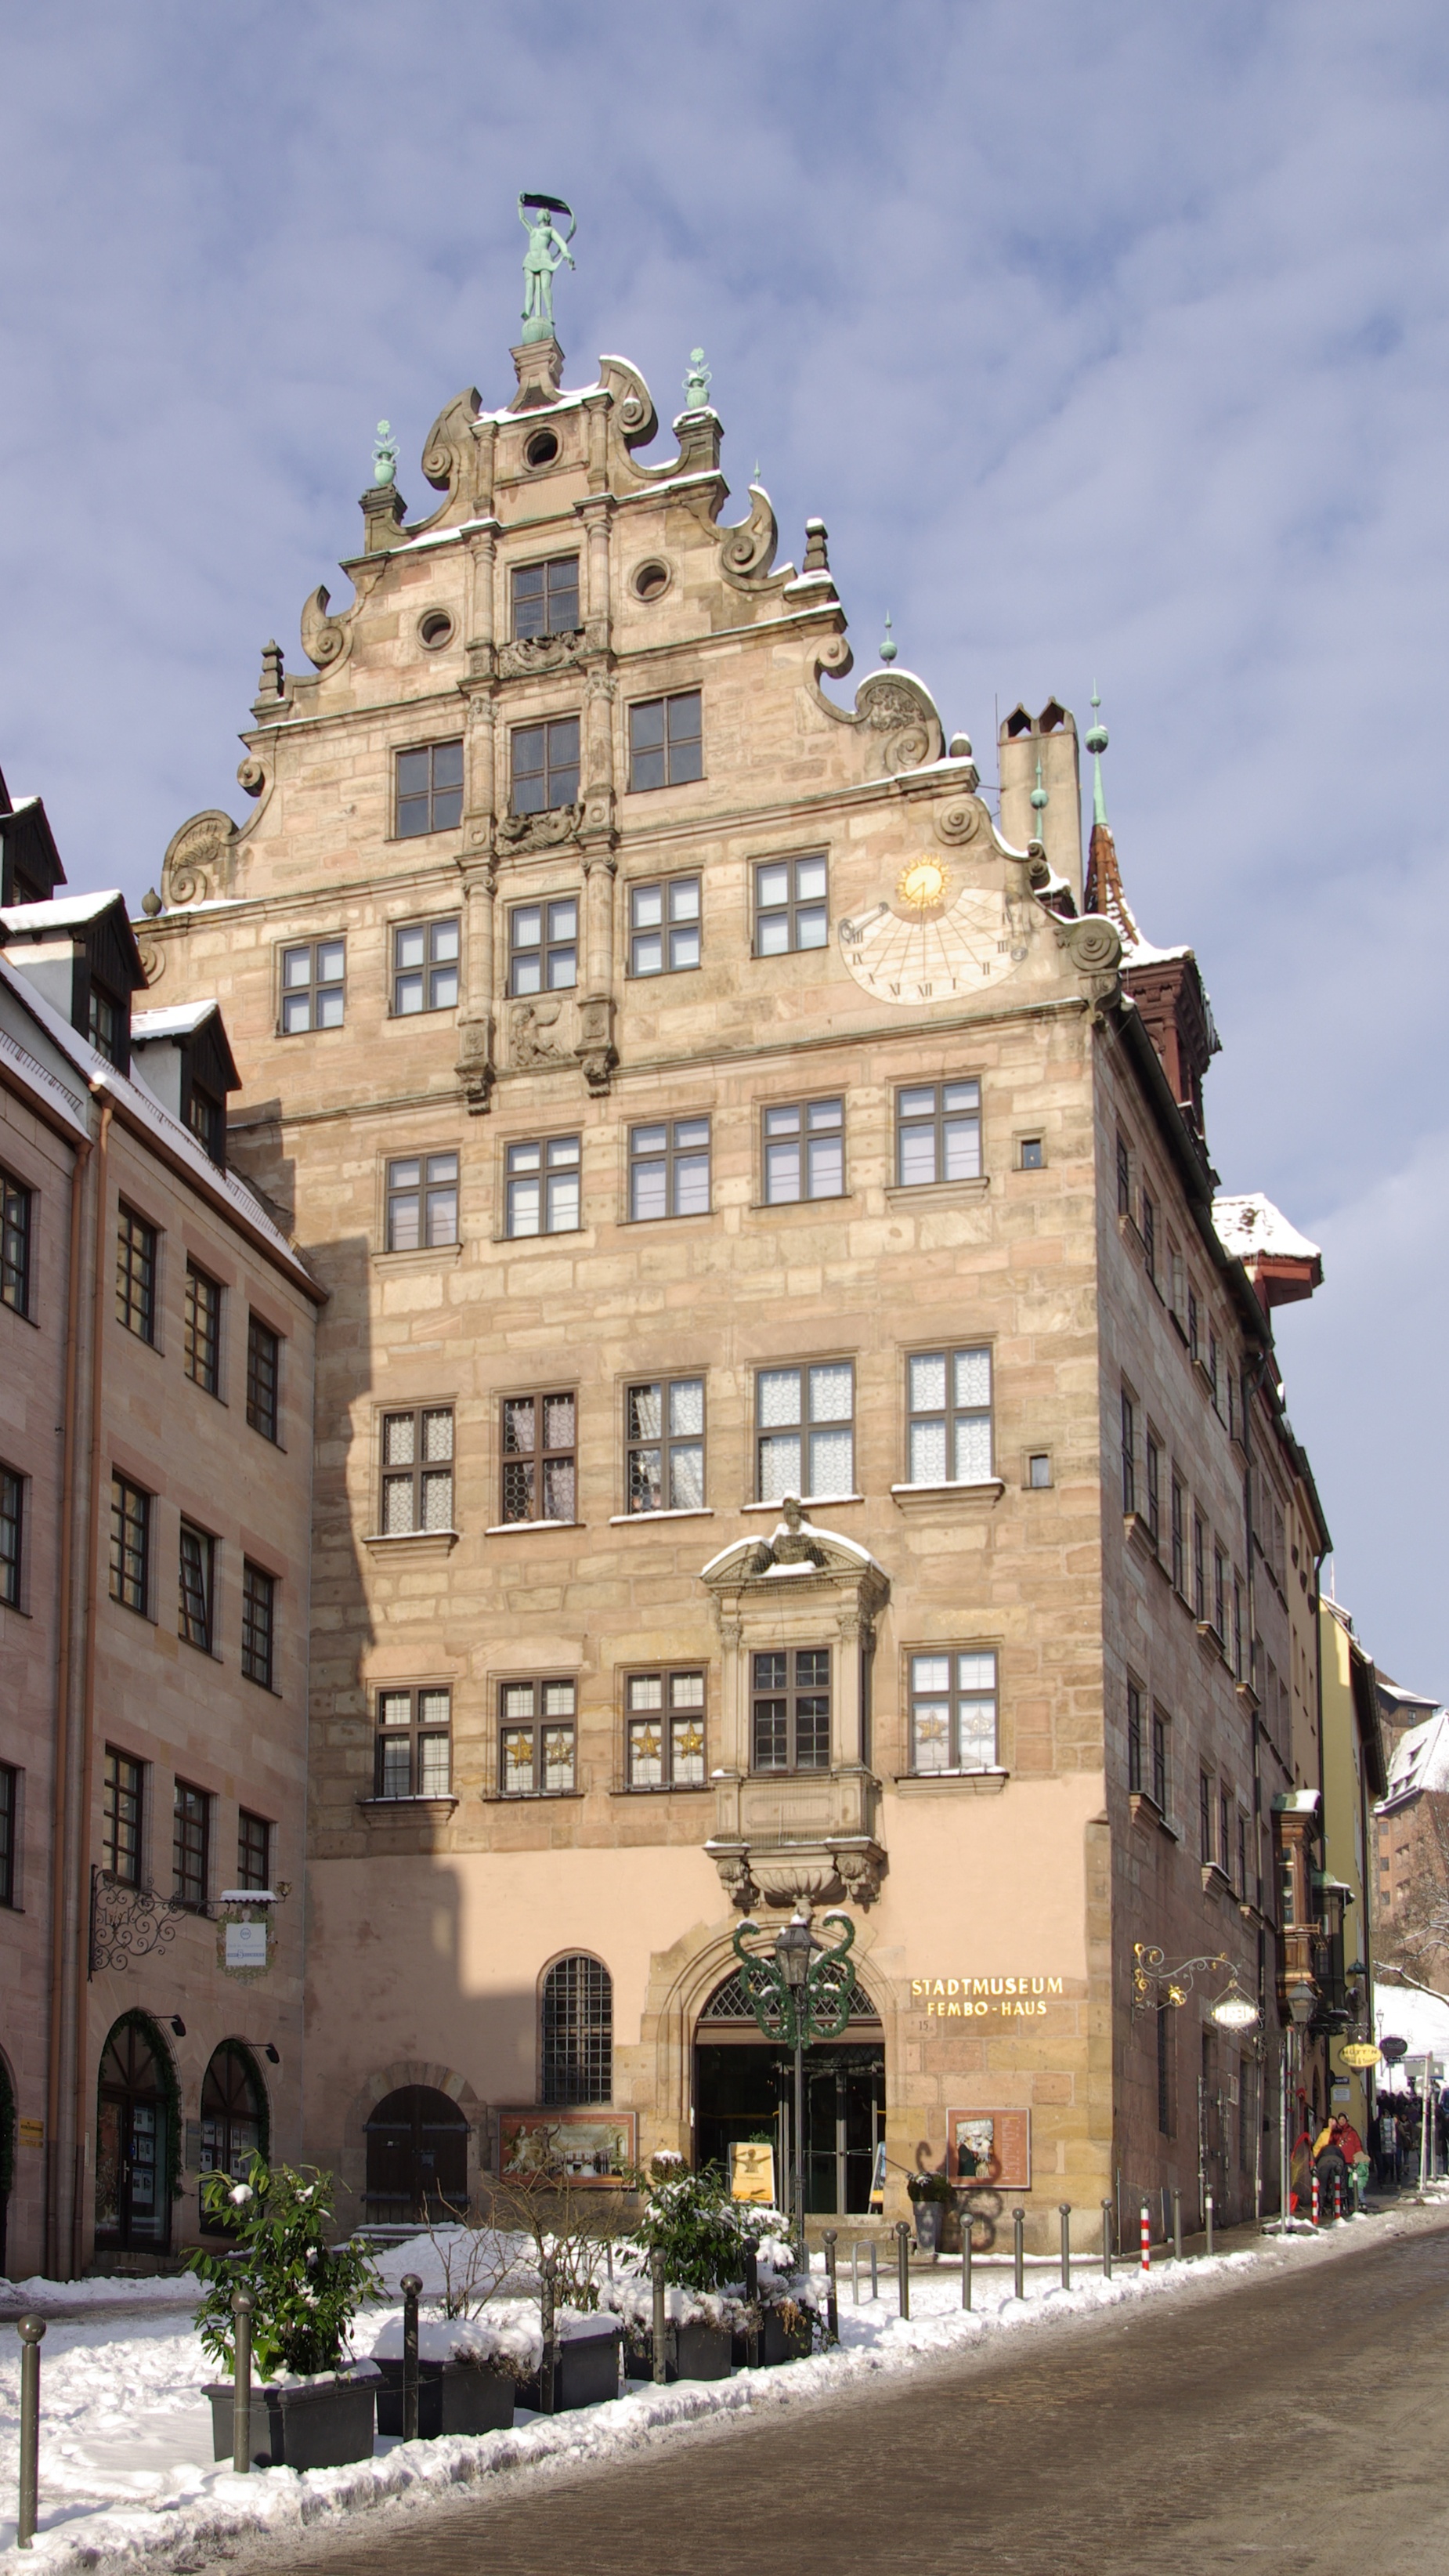 Photo of Stadtmuseum Fembohaus (City Museum Fembohaus)